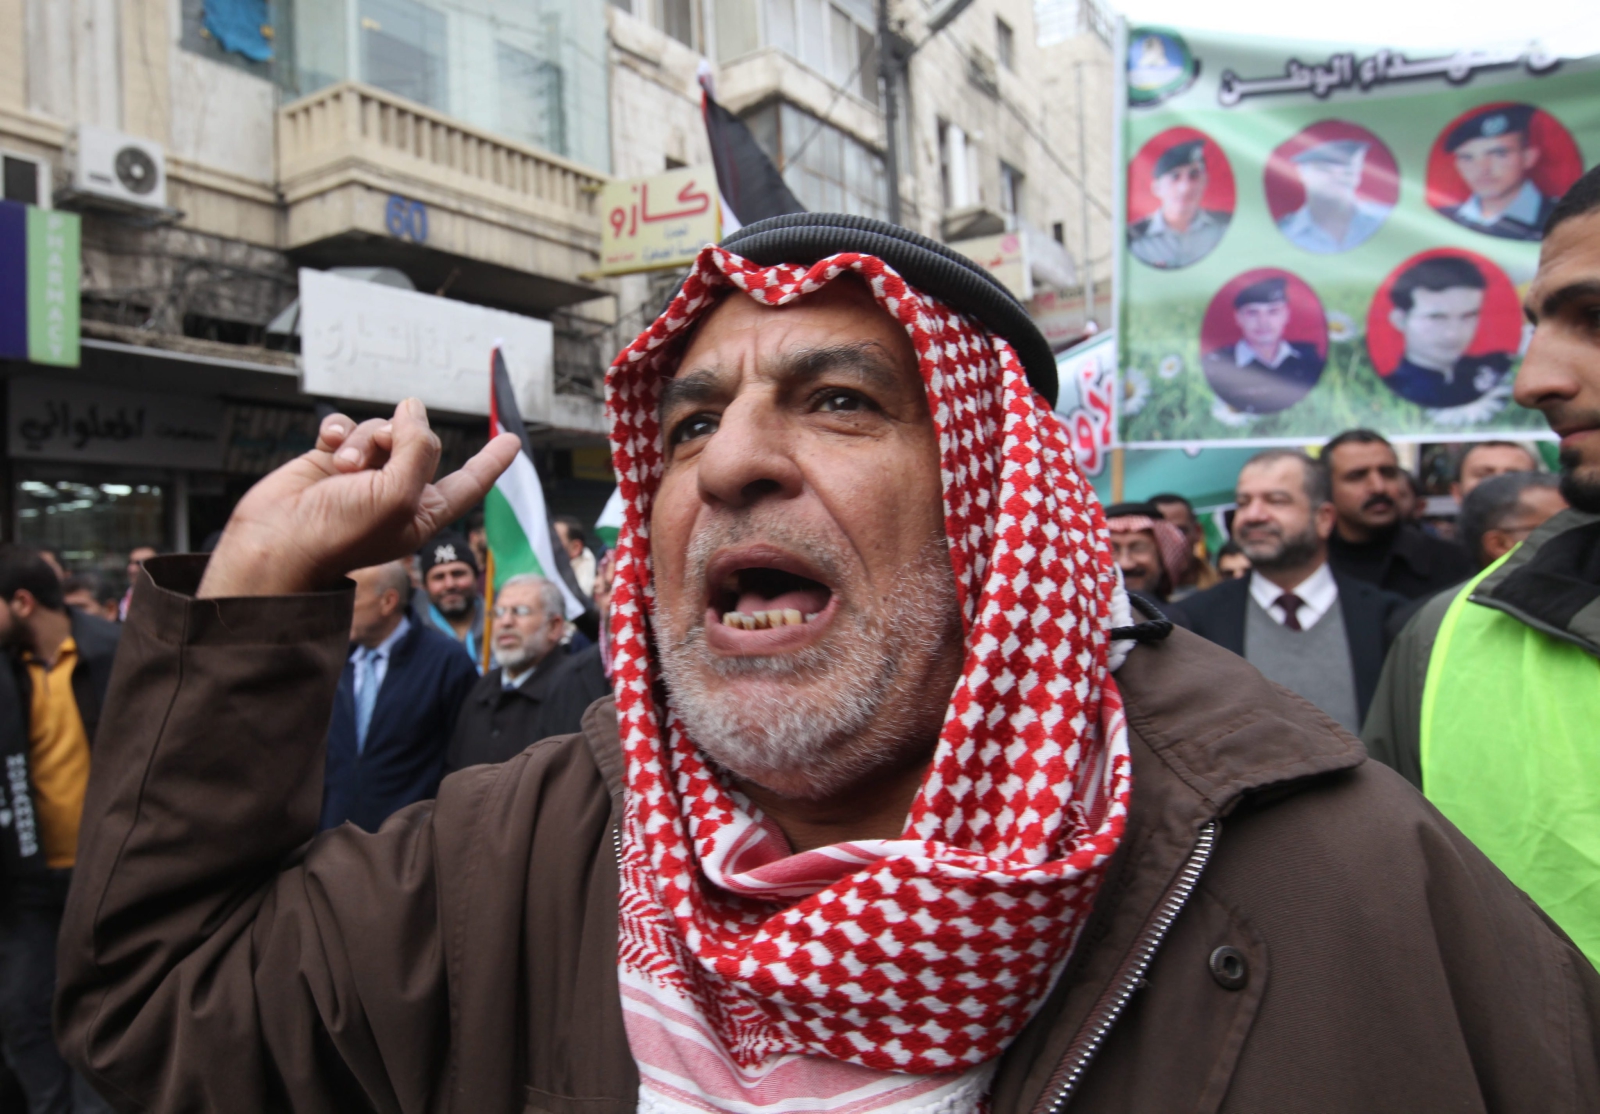 Jordania: protest przeciwko ISIS.
Fot. EPA/JAMAL NASRALLAH